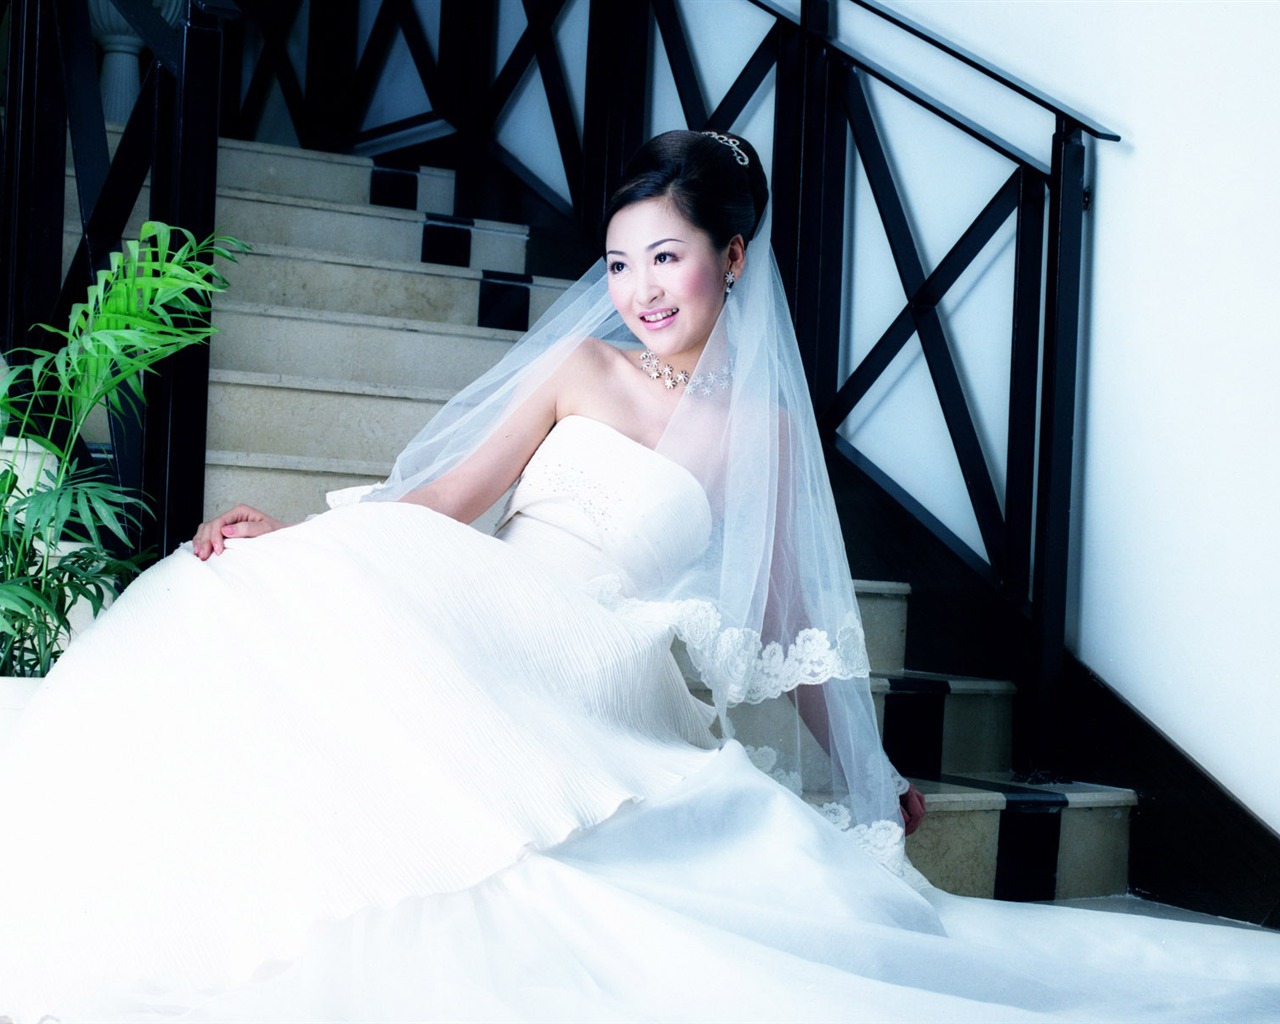 Beautiful Wedding Bride #16 - 1280x1024